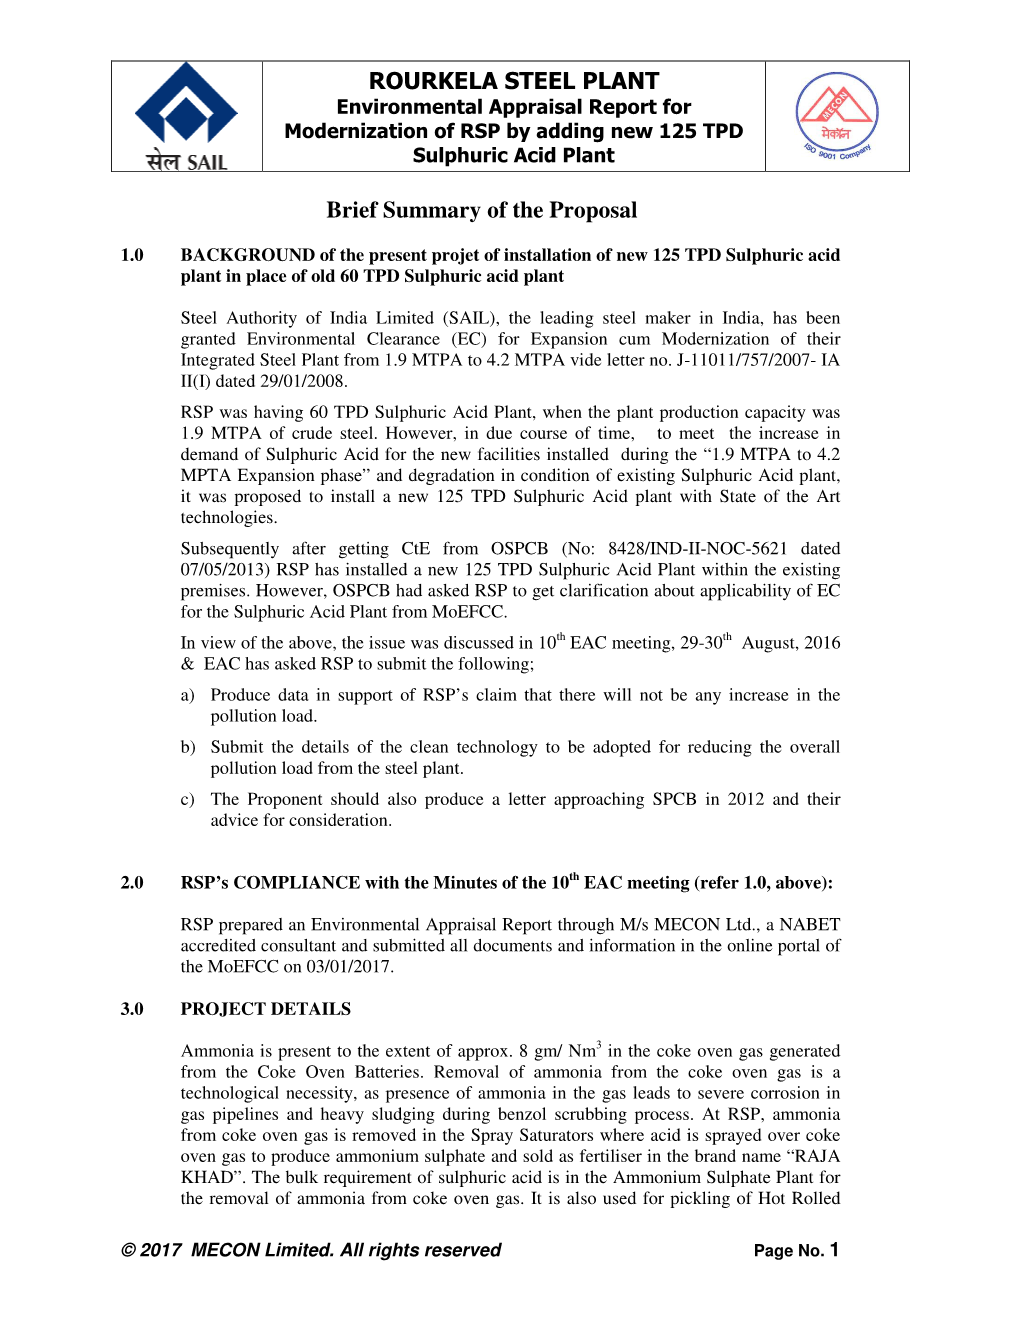 ROURKELA STEEL PLANT Brief Summary of the Proposal